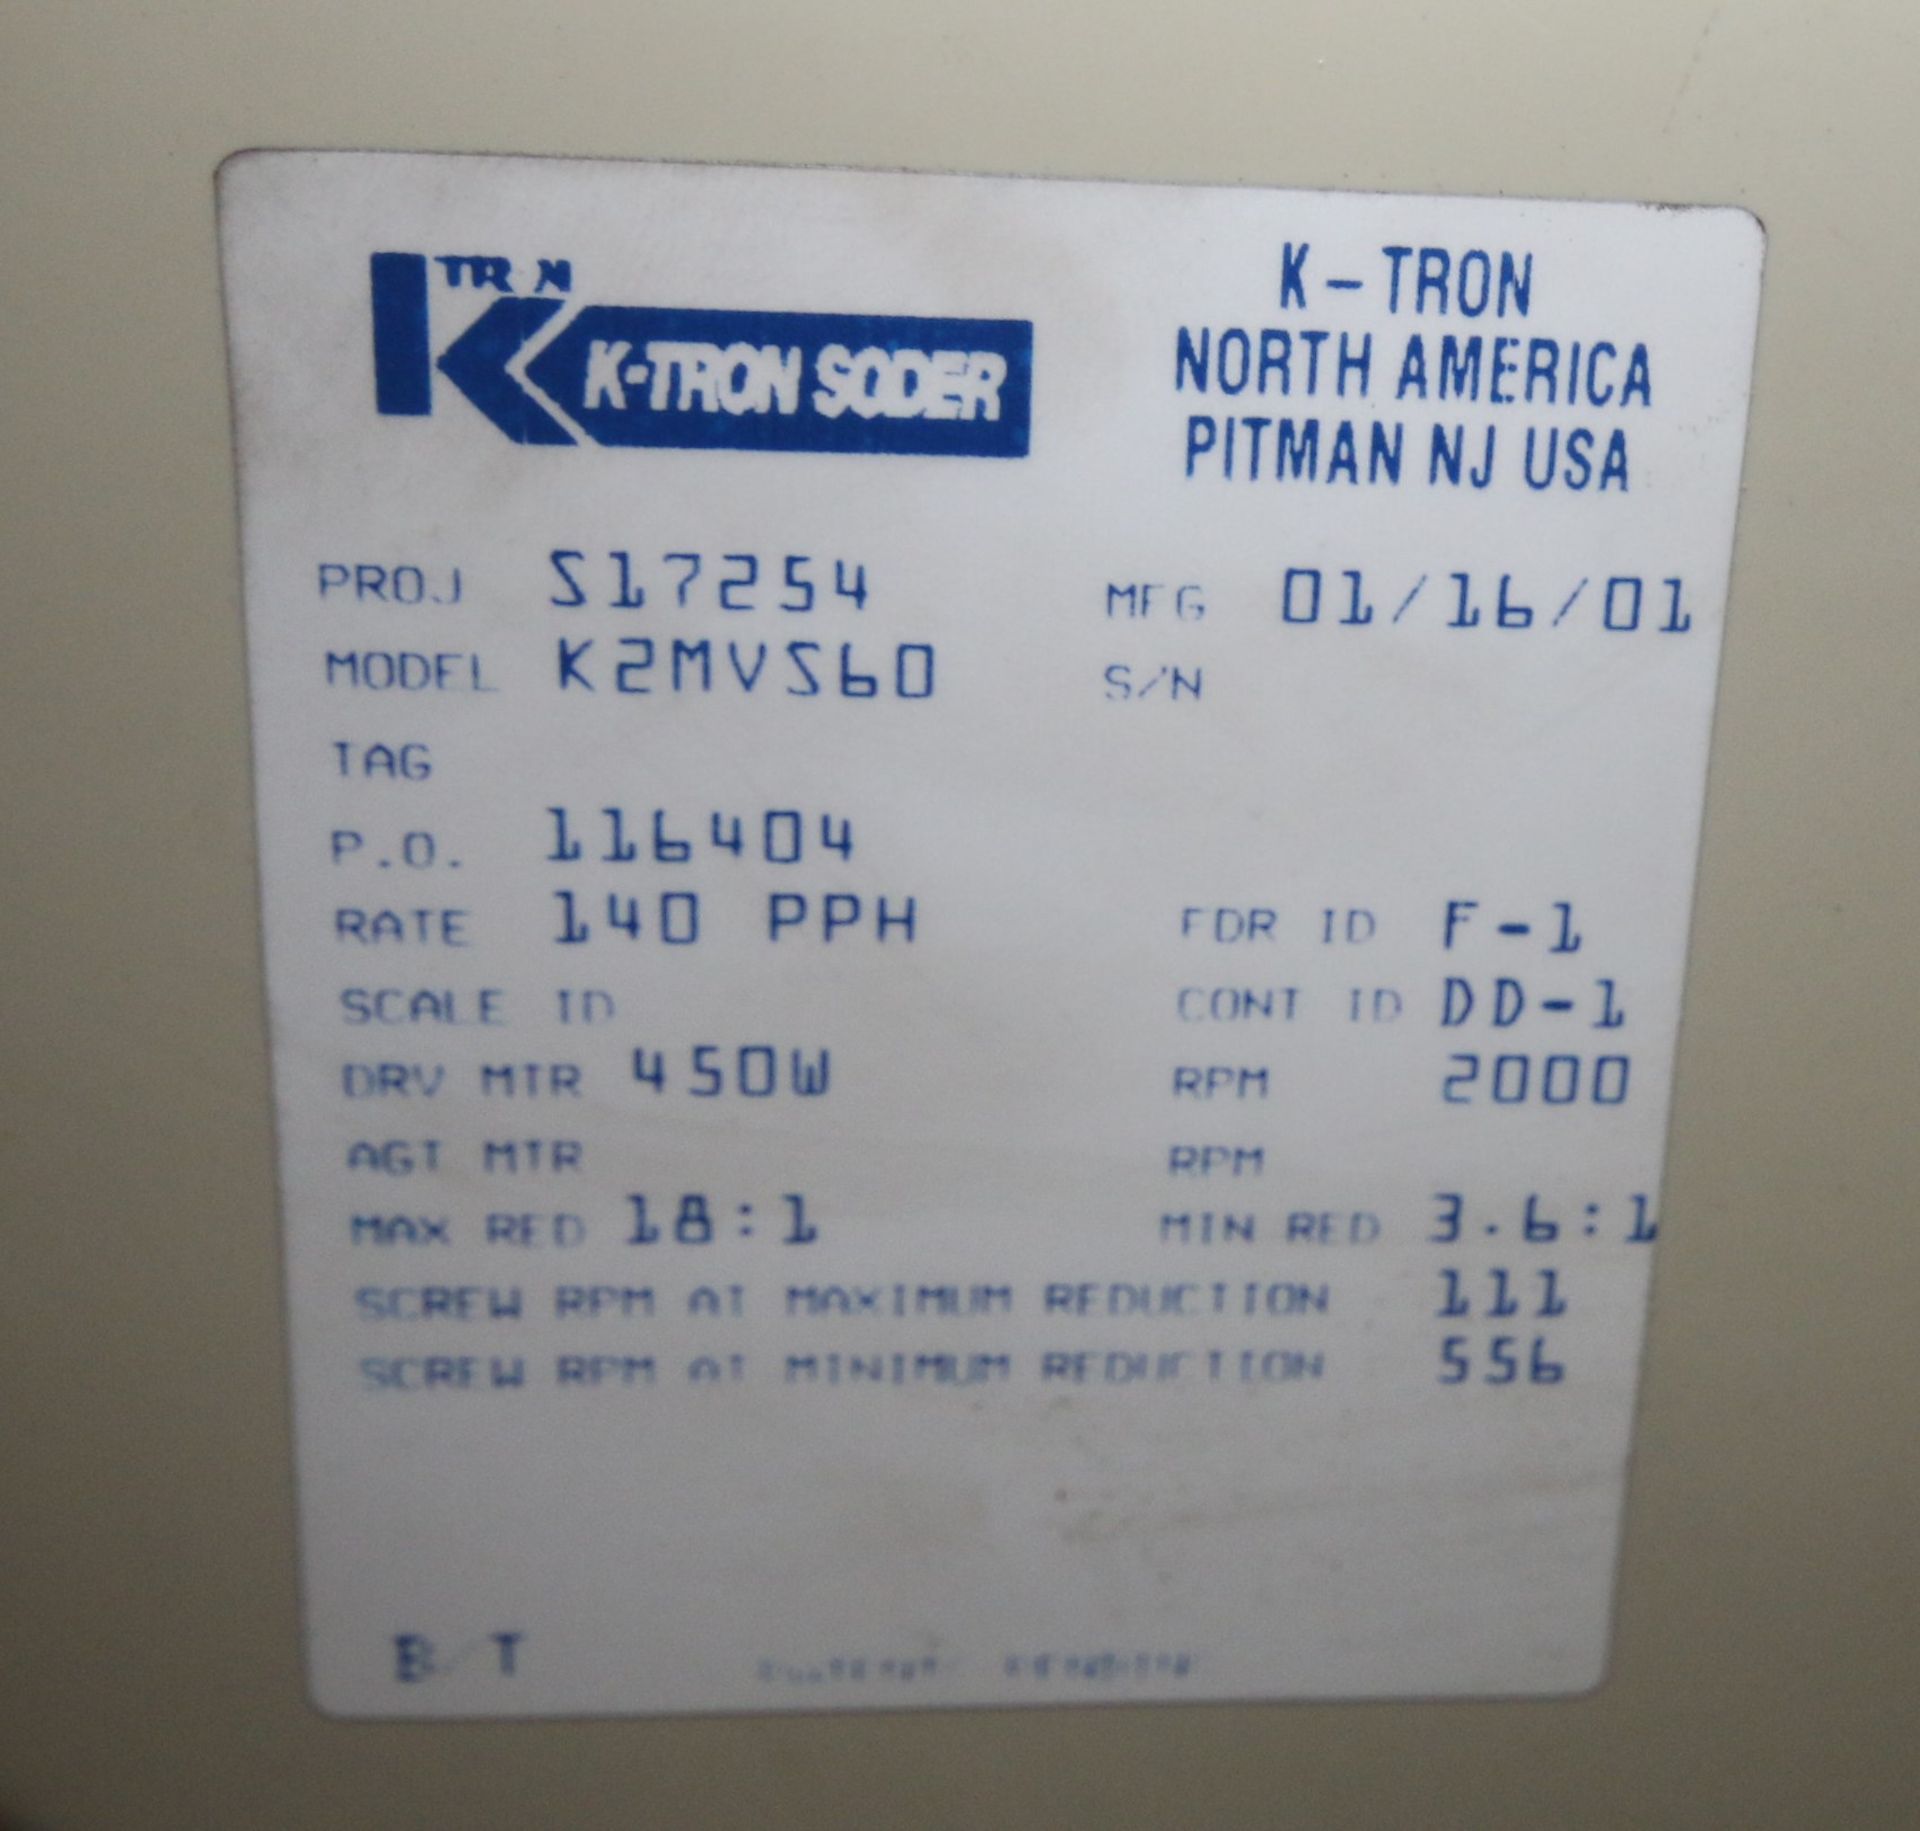 2001 K-Tron Soder K. Volumetric Screw Feeder, Model K2MVS60, Proj. S17254 with .6 hp Motor Drive, - Image 5 of 5